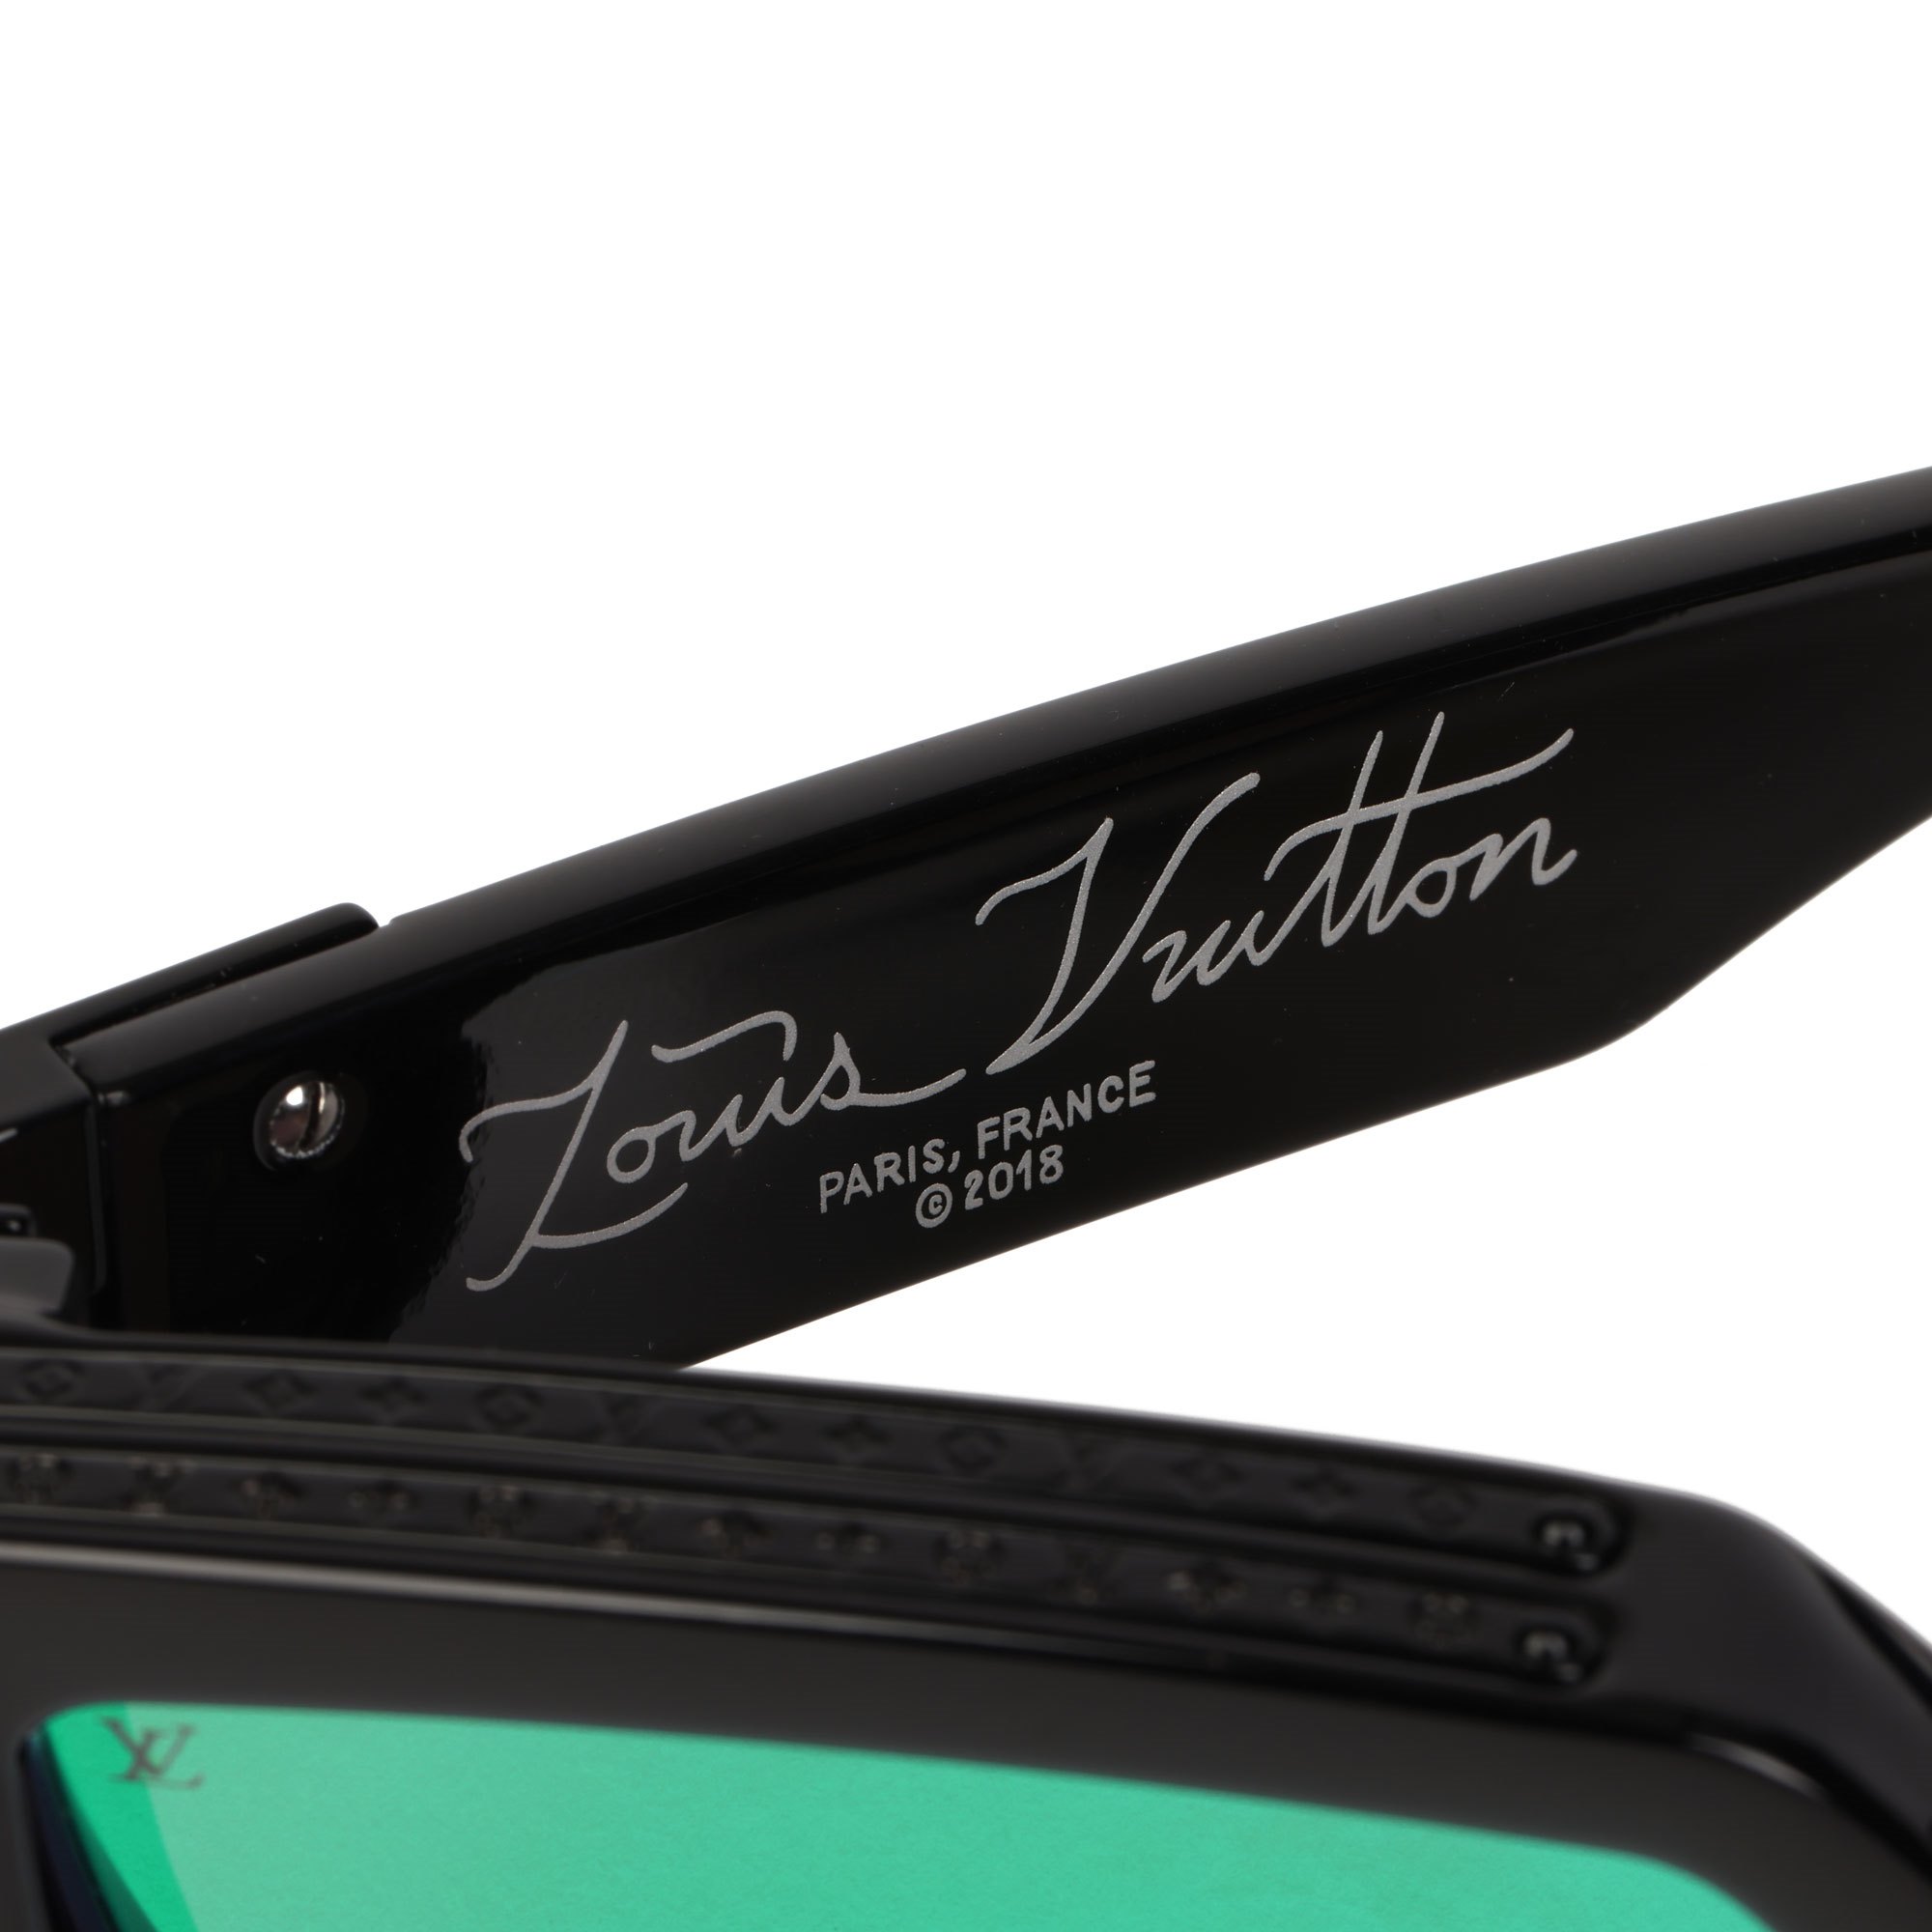 Louis Vuitton Black Acetate Green Mirrored Tourist vs. Purist 1.1 Millionaire Sunglasses - Size W